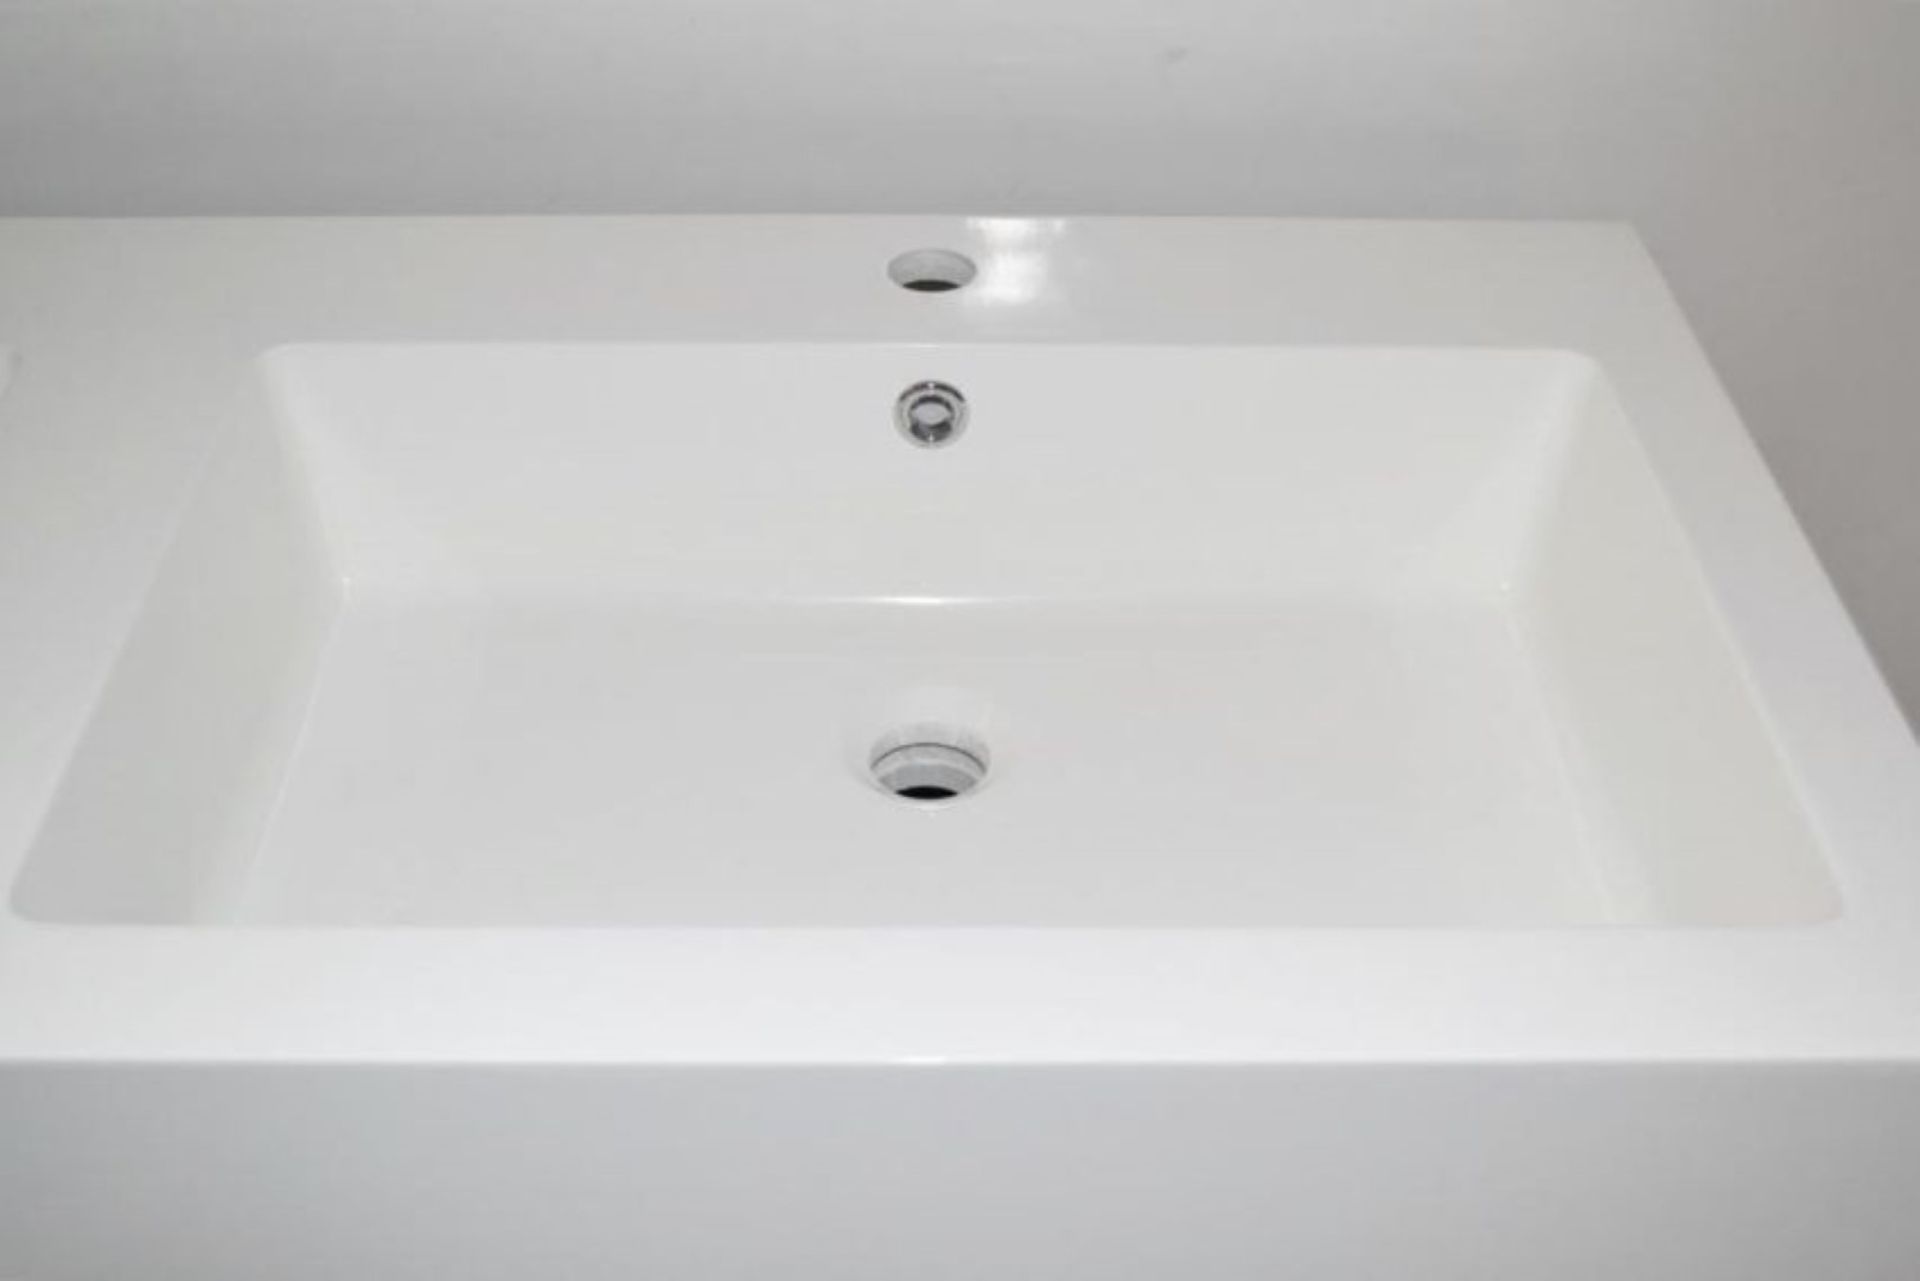 5 x Gloss White 1200mm 4-Door Double Basin Freestanding Bathroom Vanity Cabinets - New & Boxed Stock - Image 5 of 8